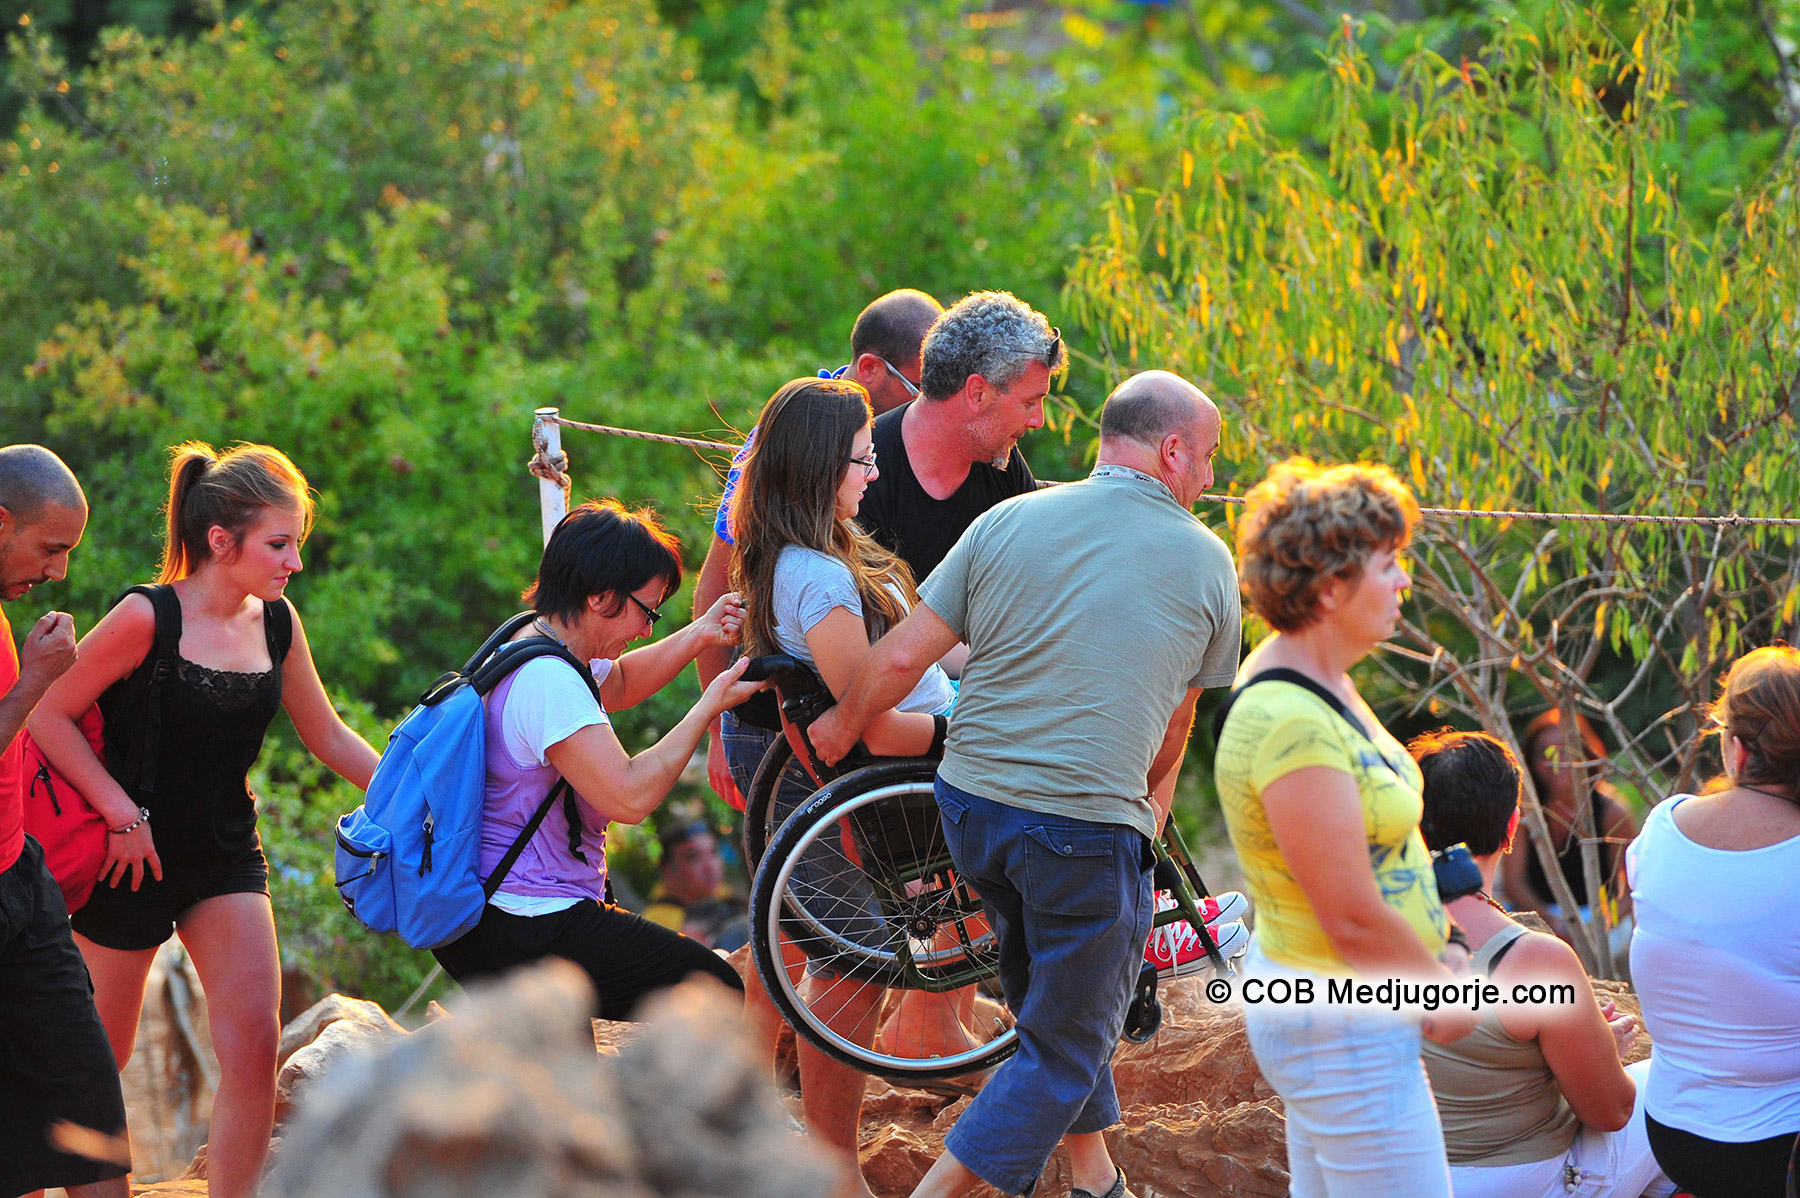 Carry the wheelchair Ivan Prayer Group August 17, 2012